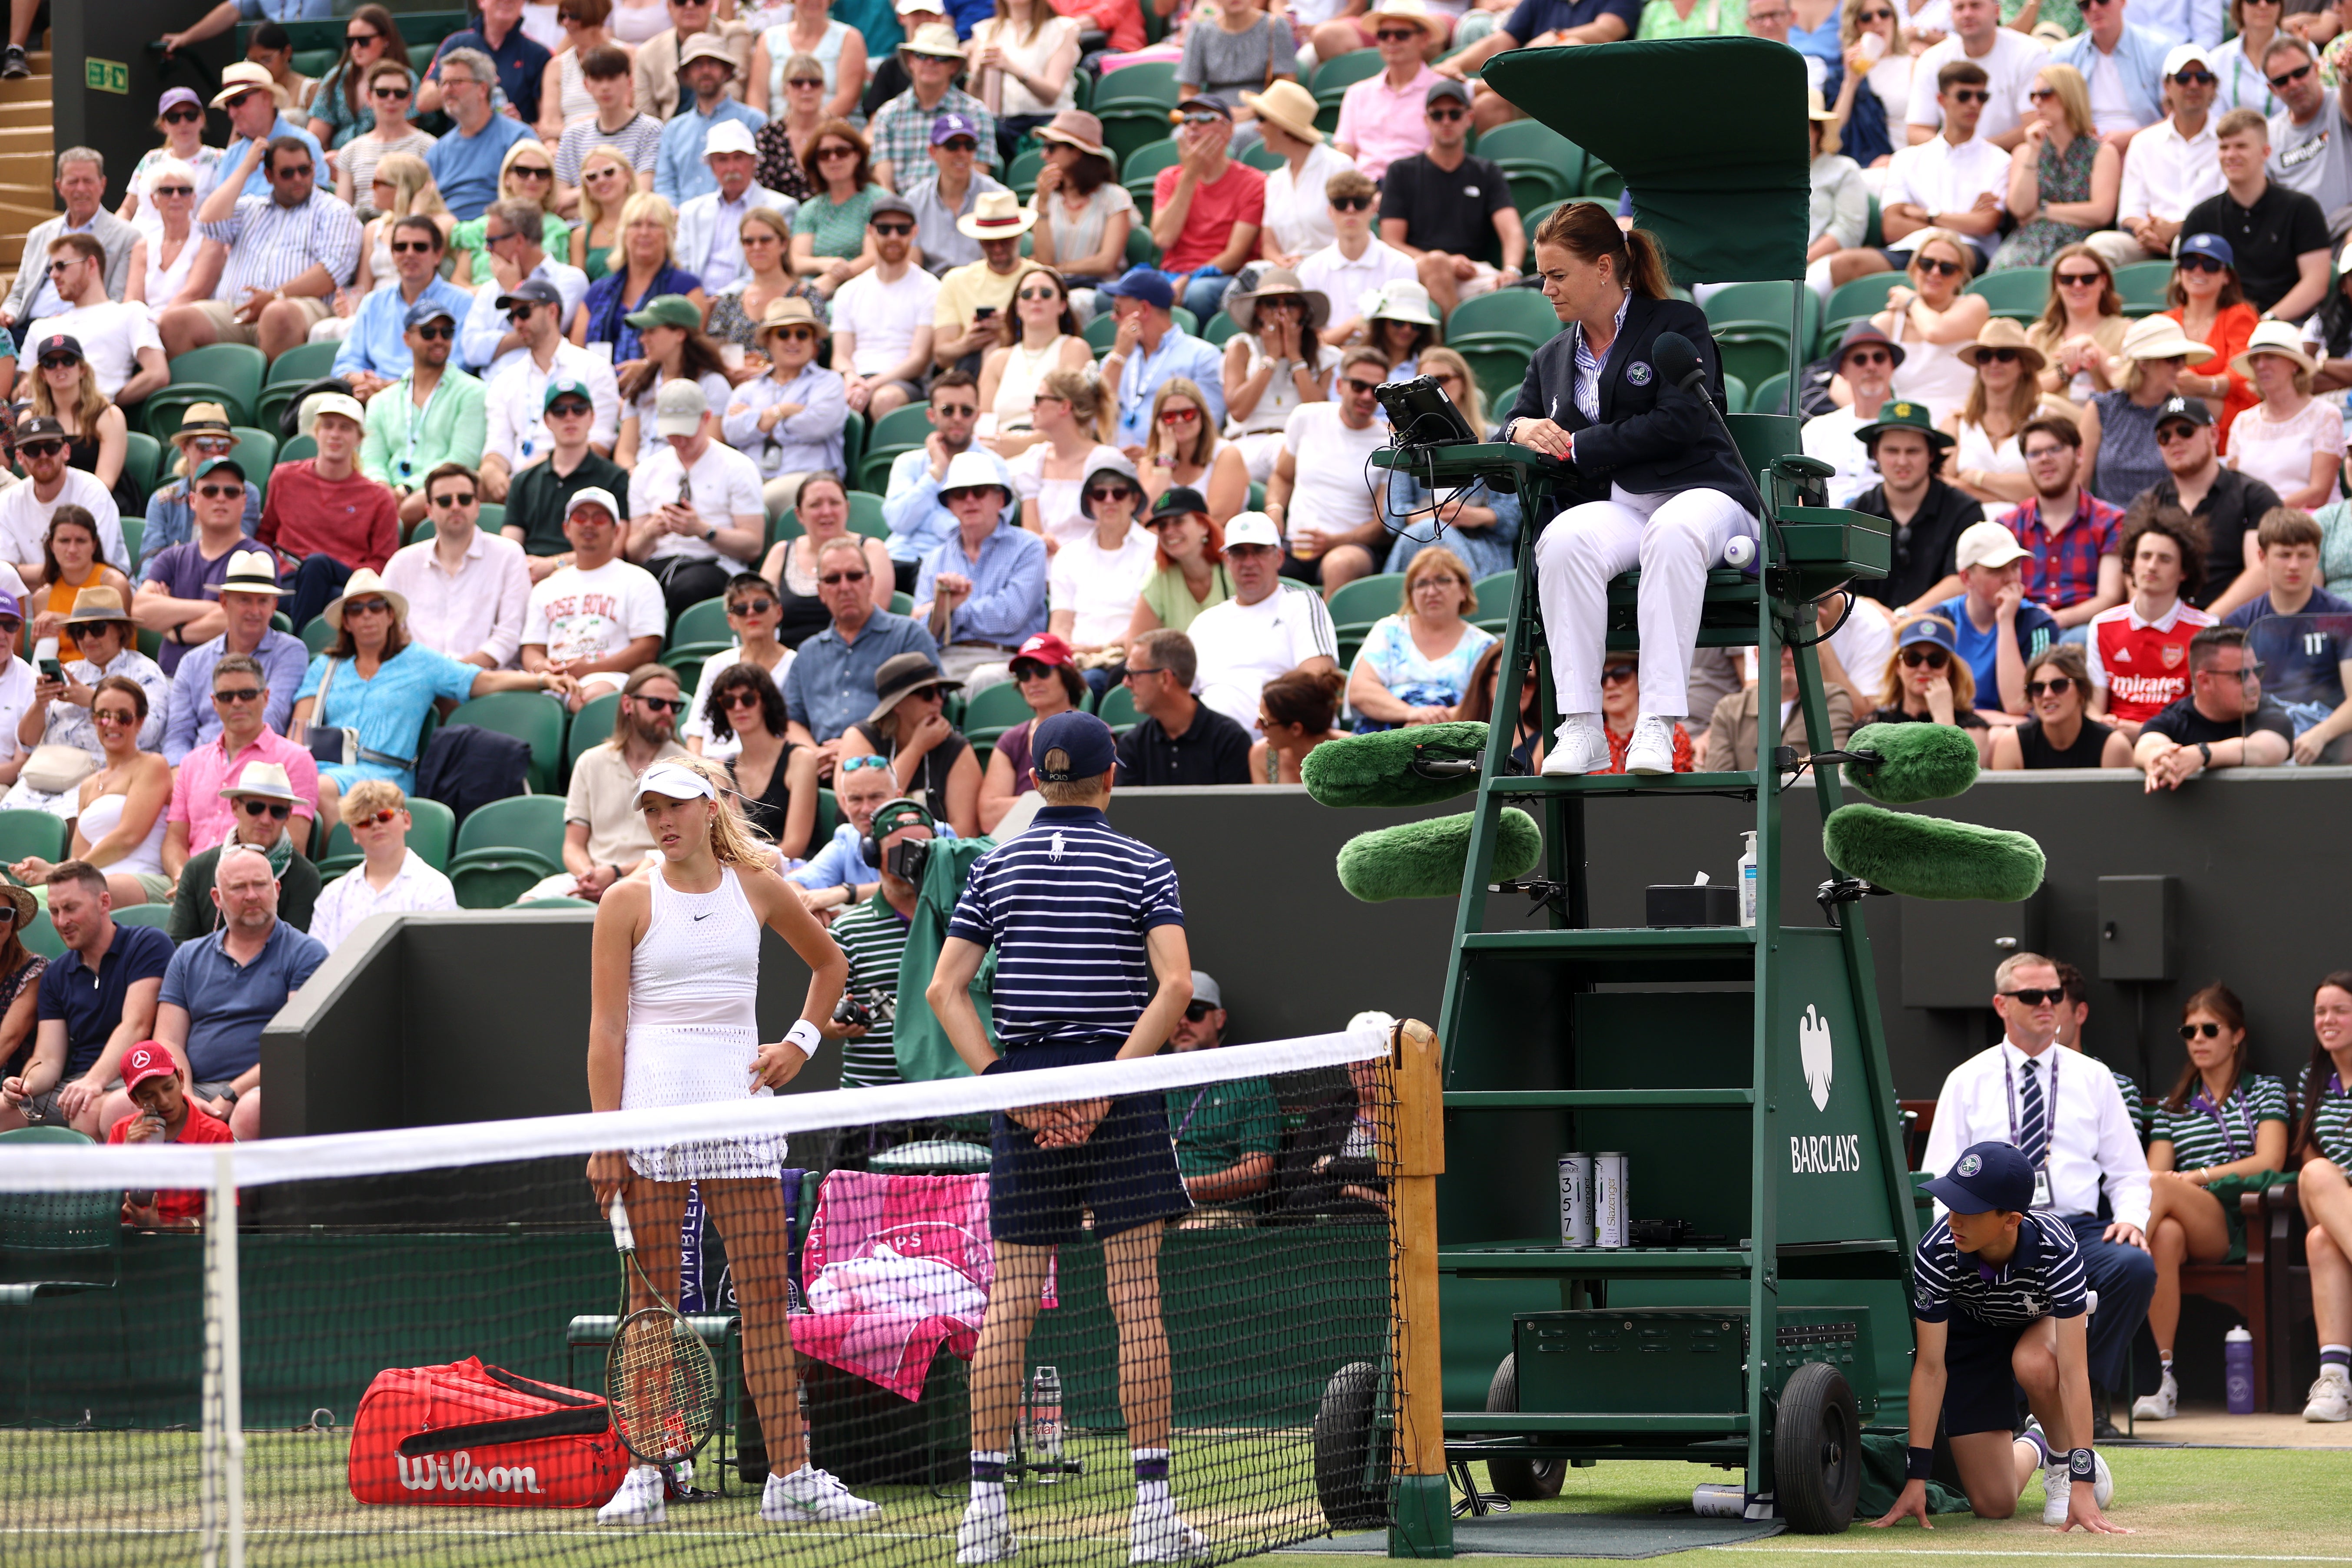 Andreeva refused to shake the umpire’s hand at Wimbledon